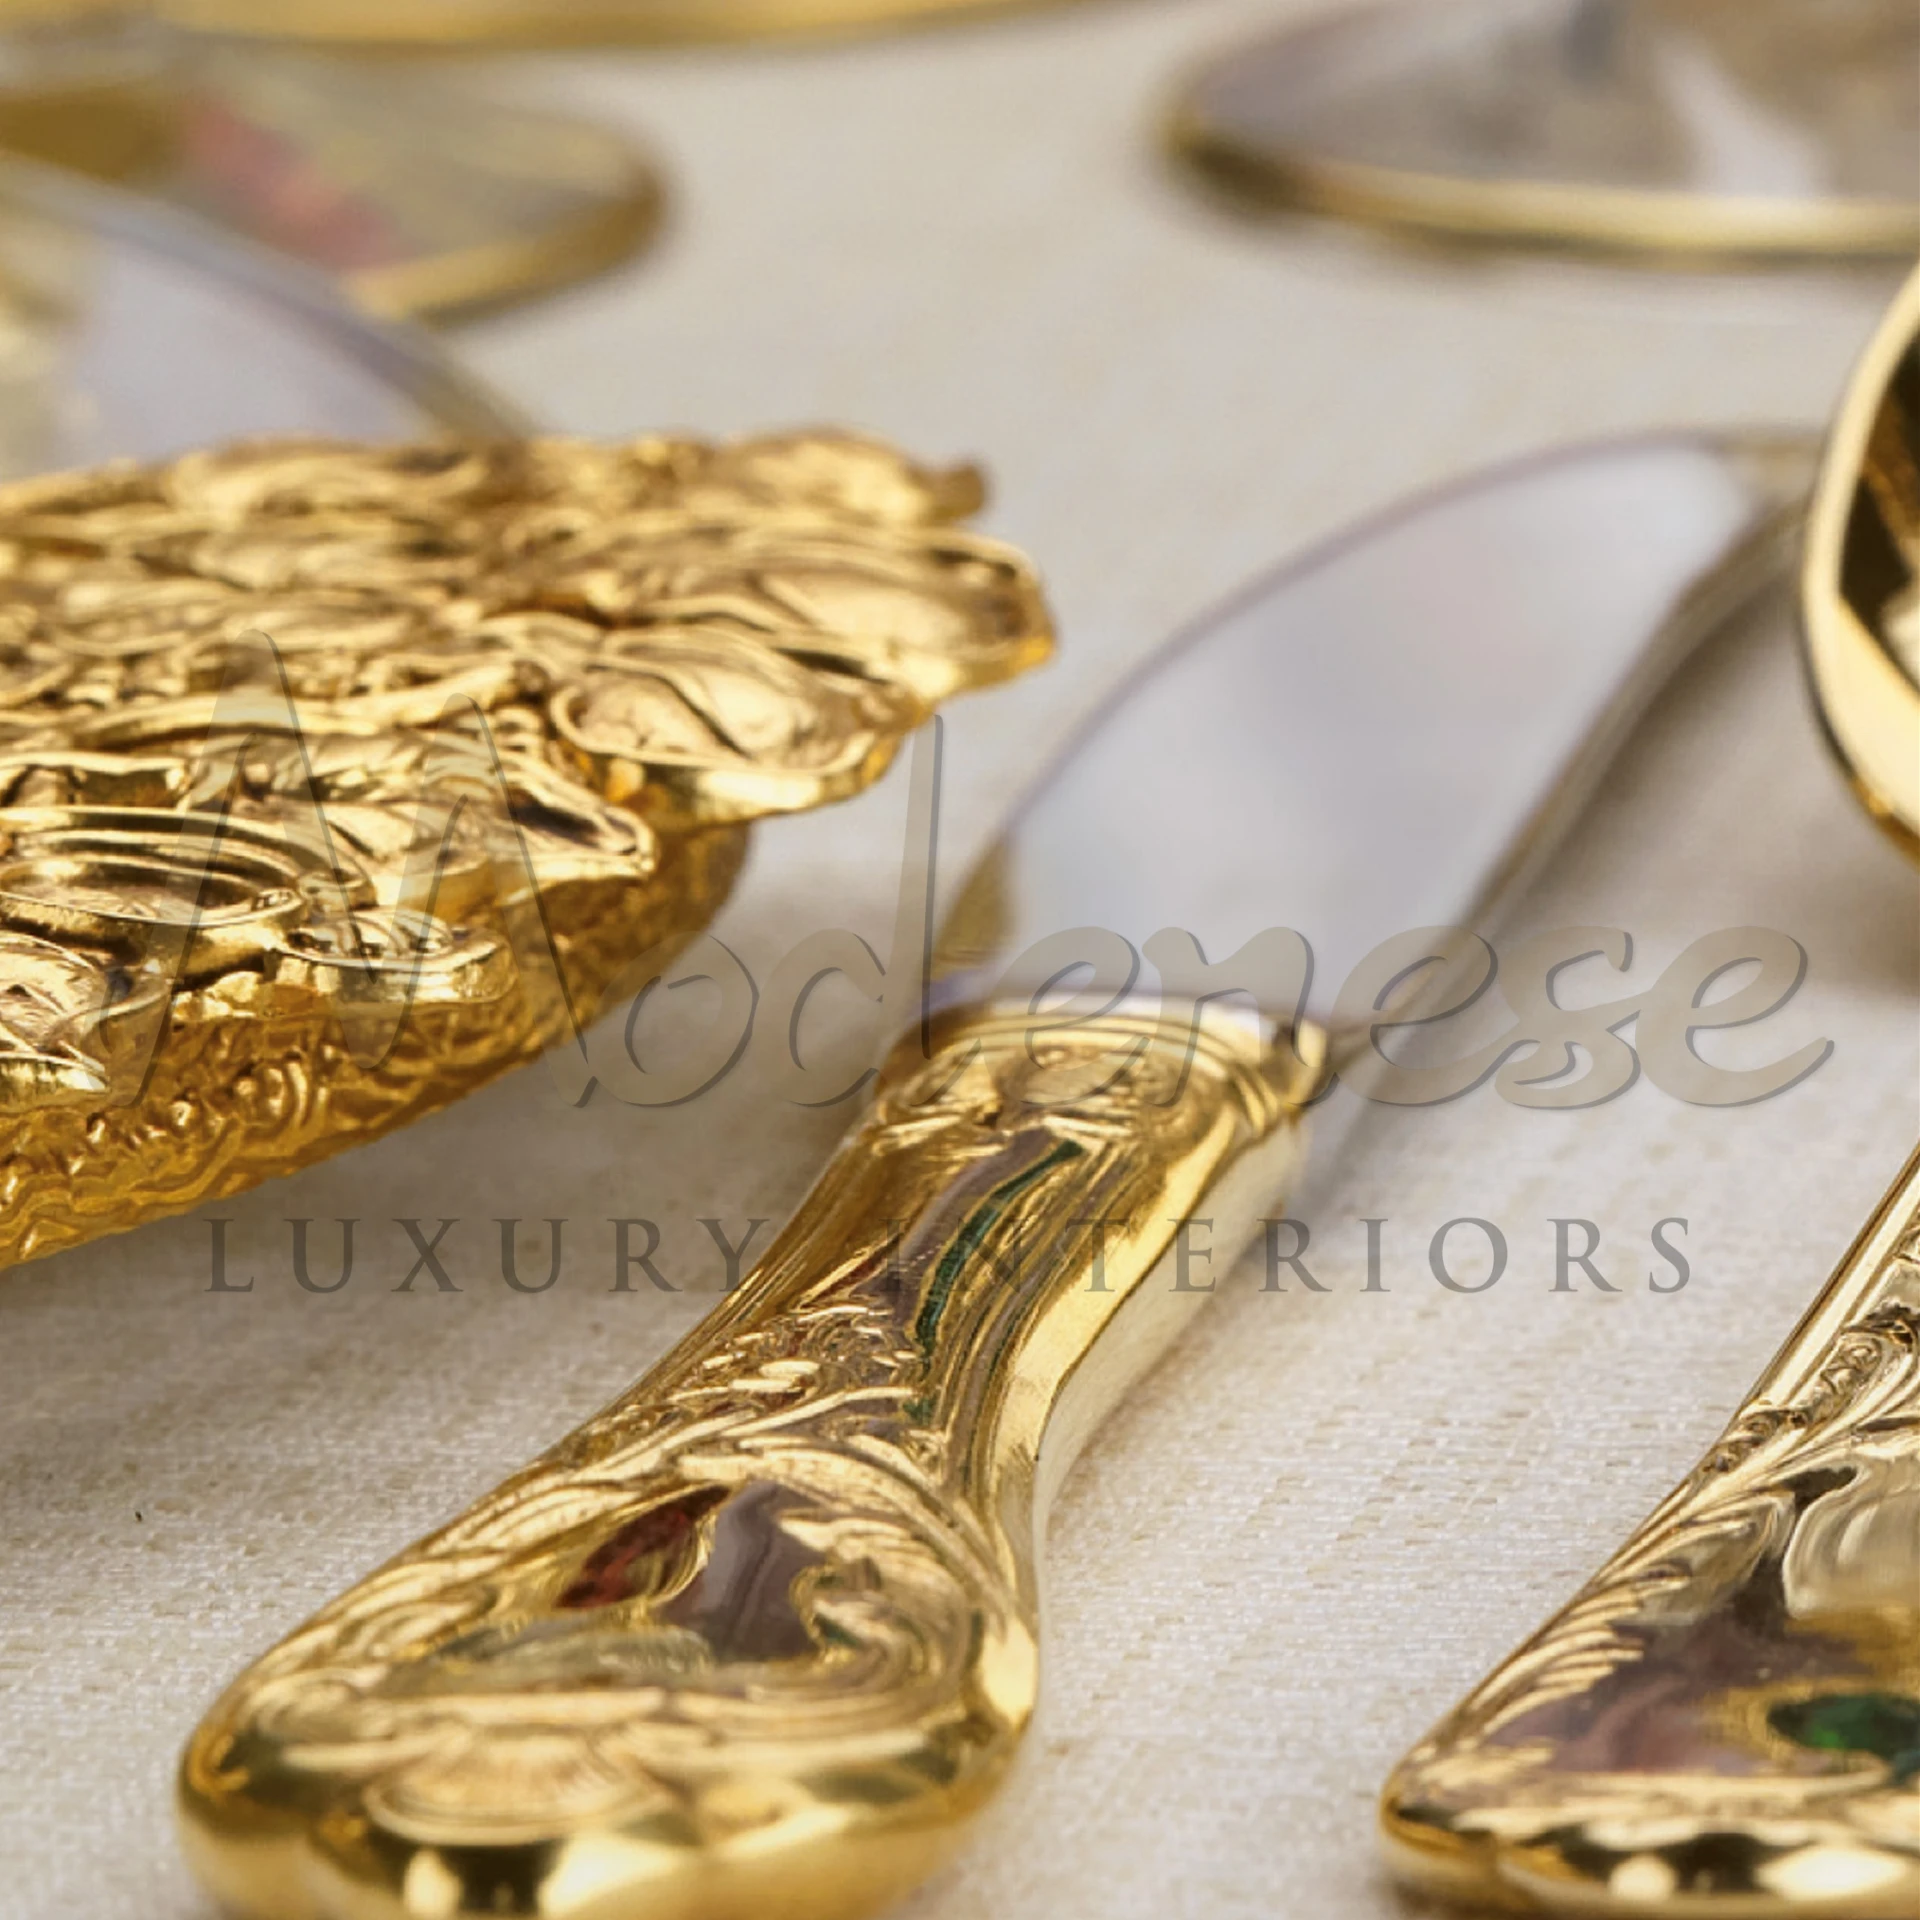 Elegant golden silverware handles with artistic engravings